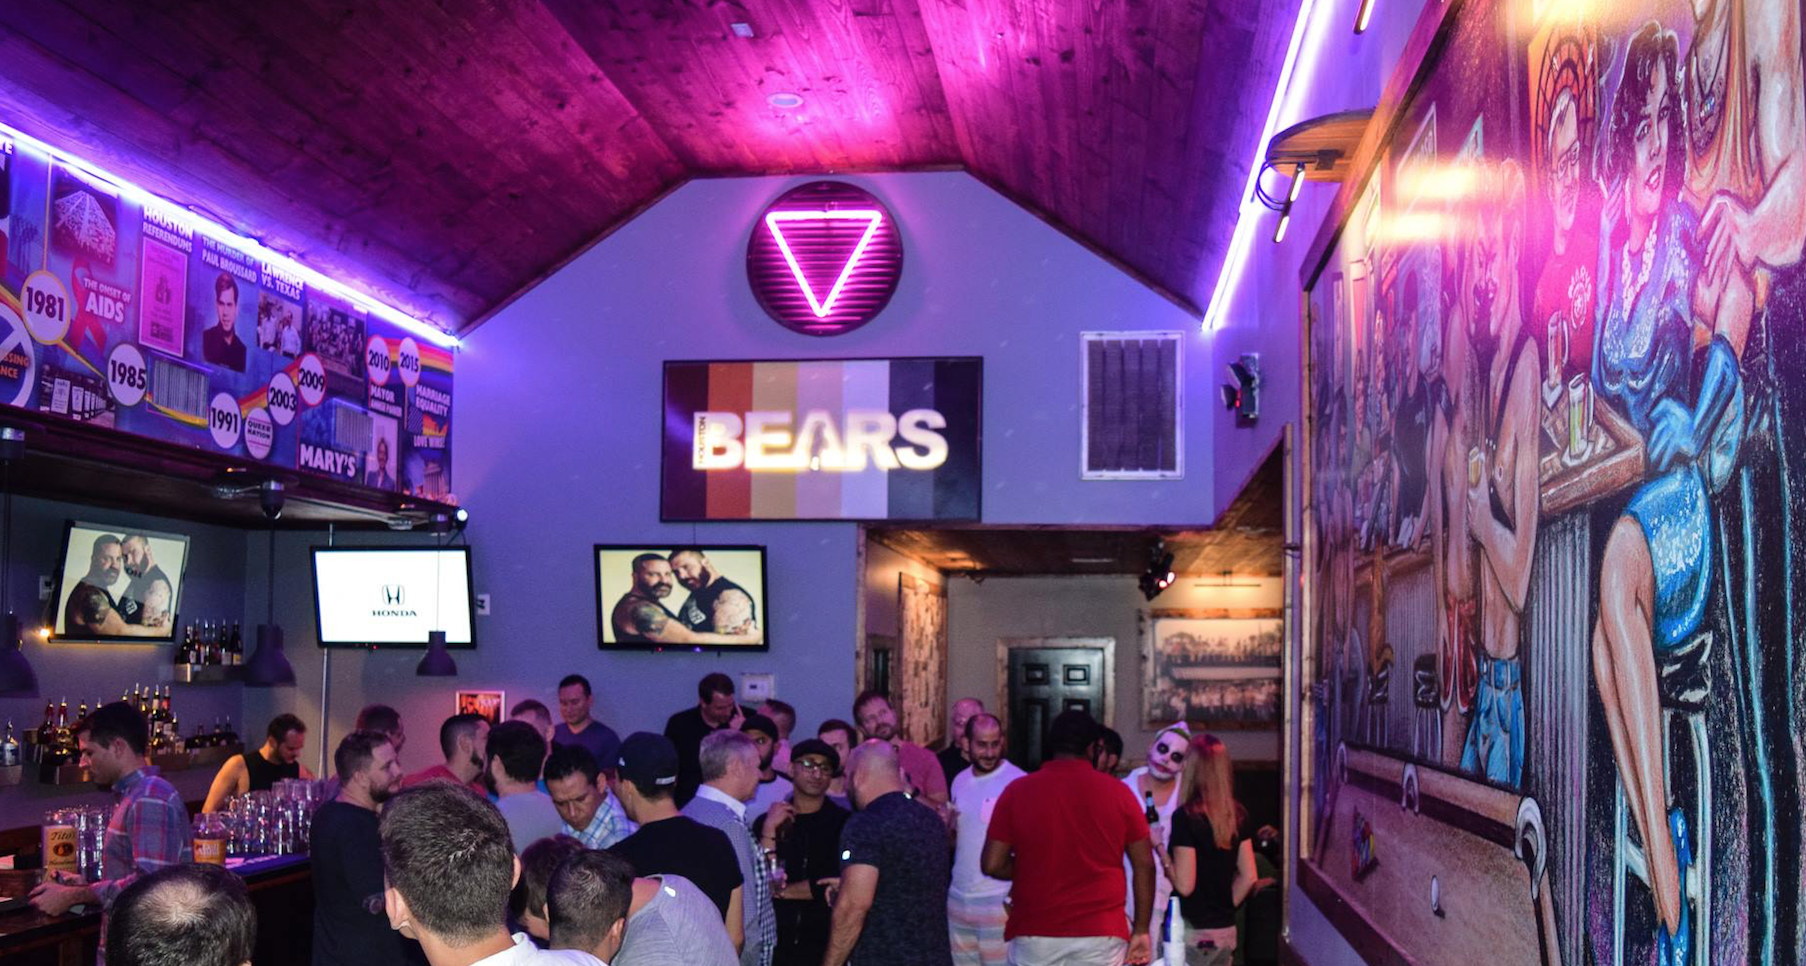 houston gay bars bears